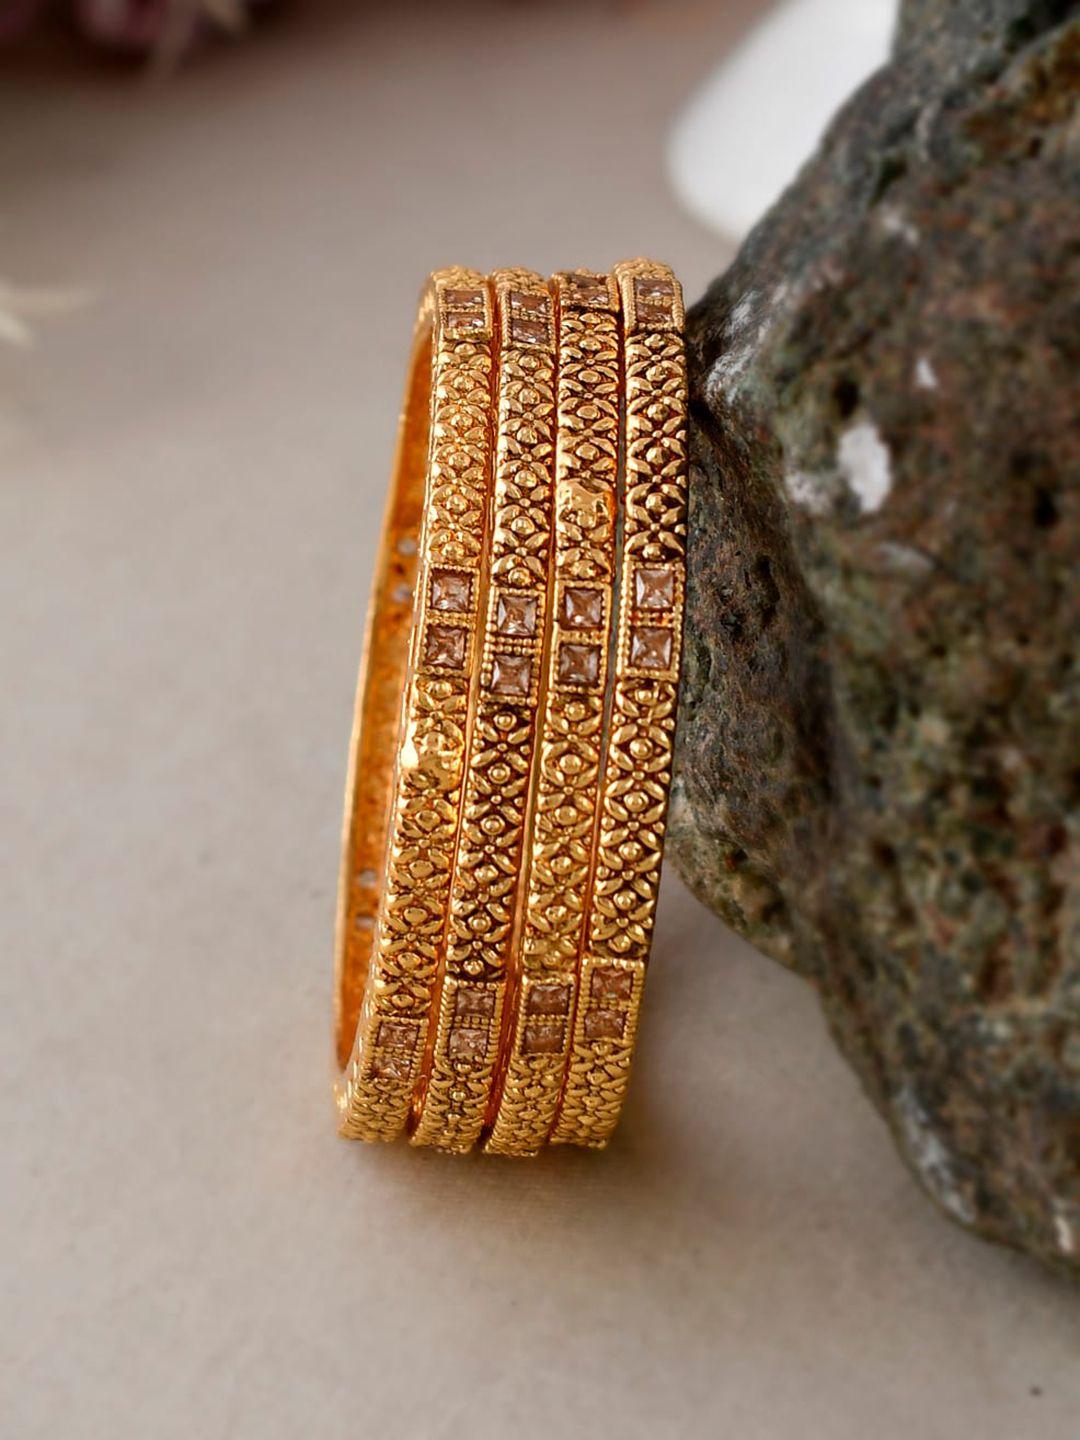 shoshaa set of 6 gold-plated stone-studded bangles